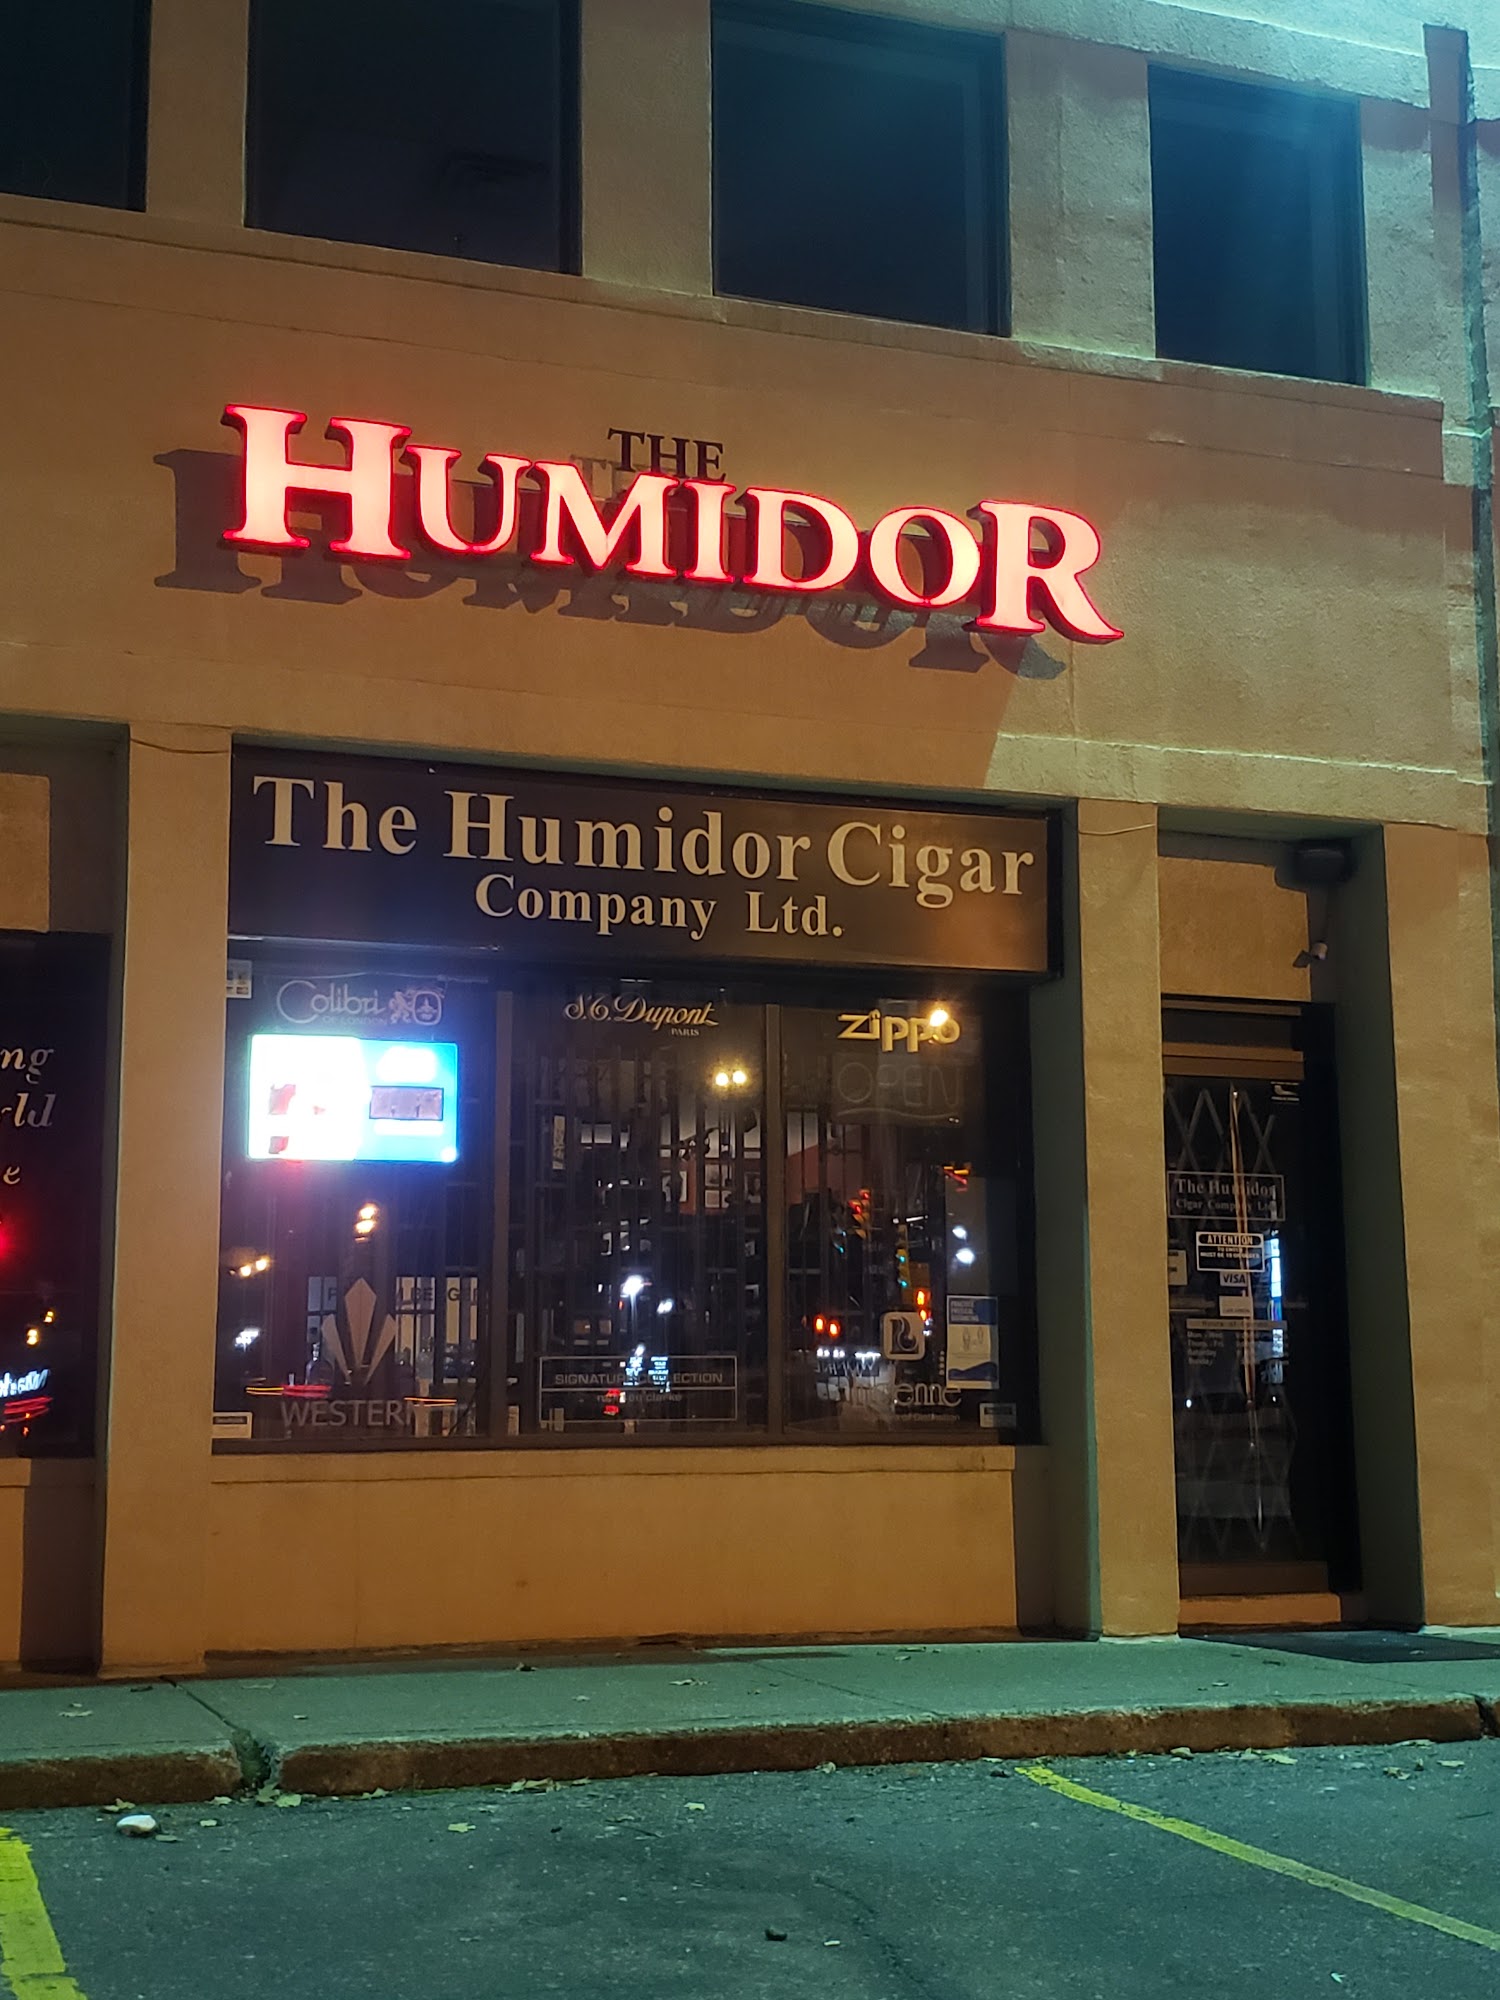 The Humidor Cigar Co Ltd